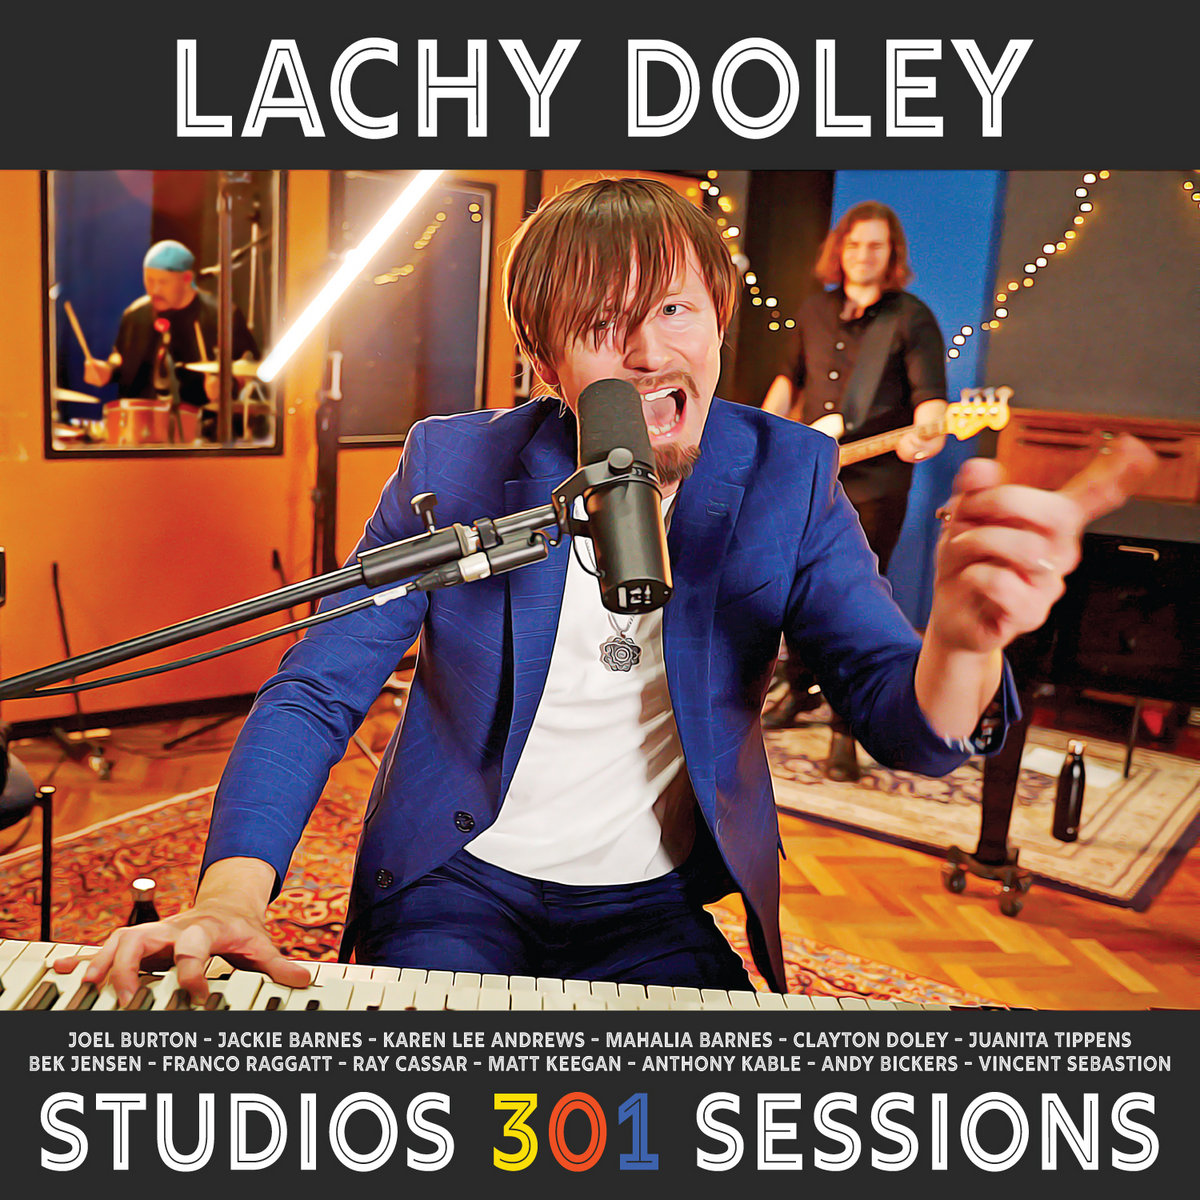 Studios 301 Sessions